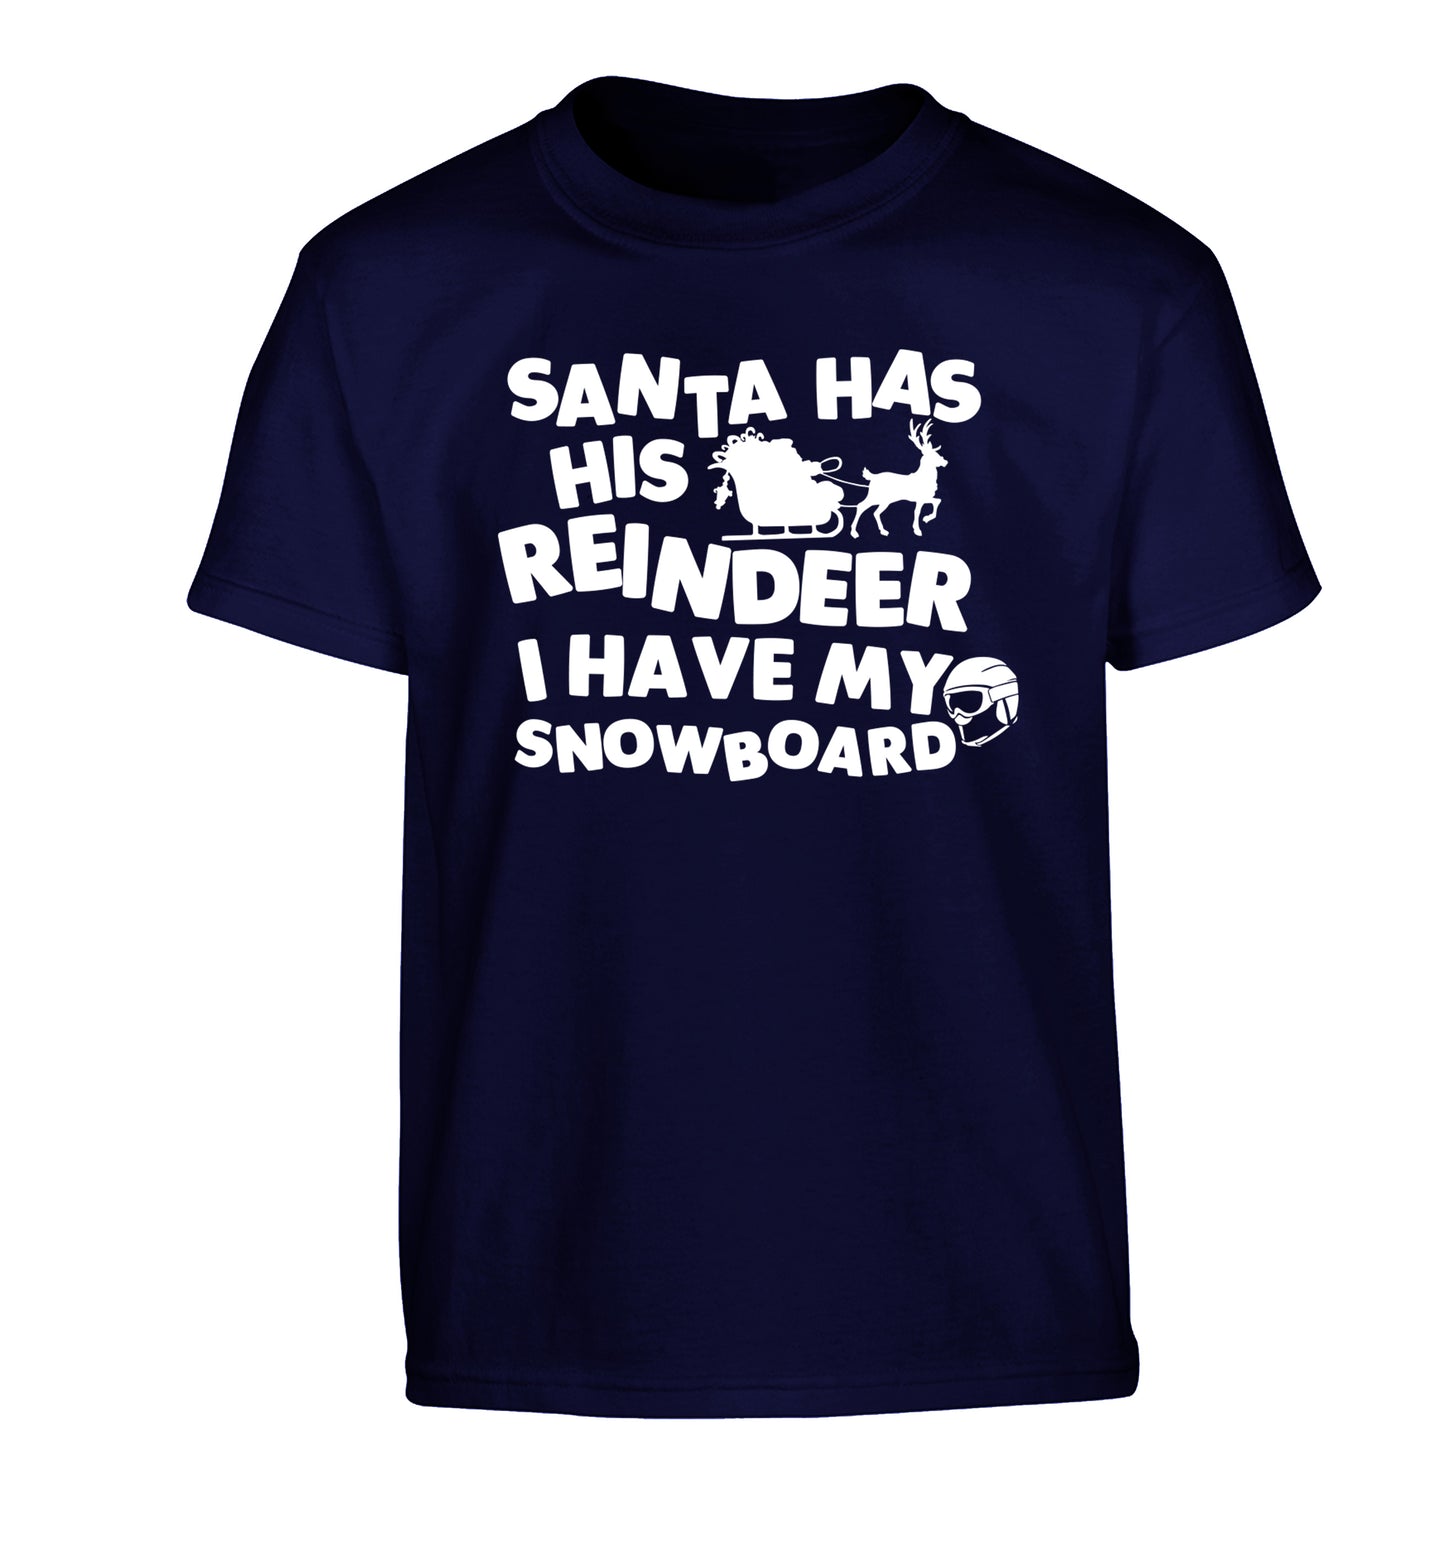 Santa has his reindeer I have my snowboard Children's navy Tshirt 12-14 Years